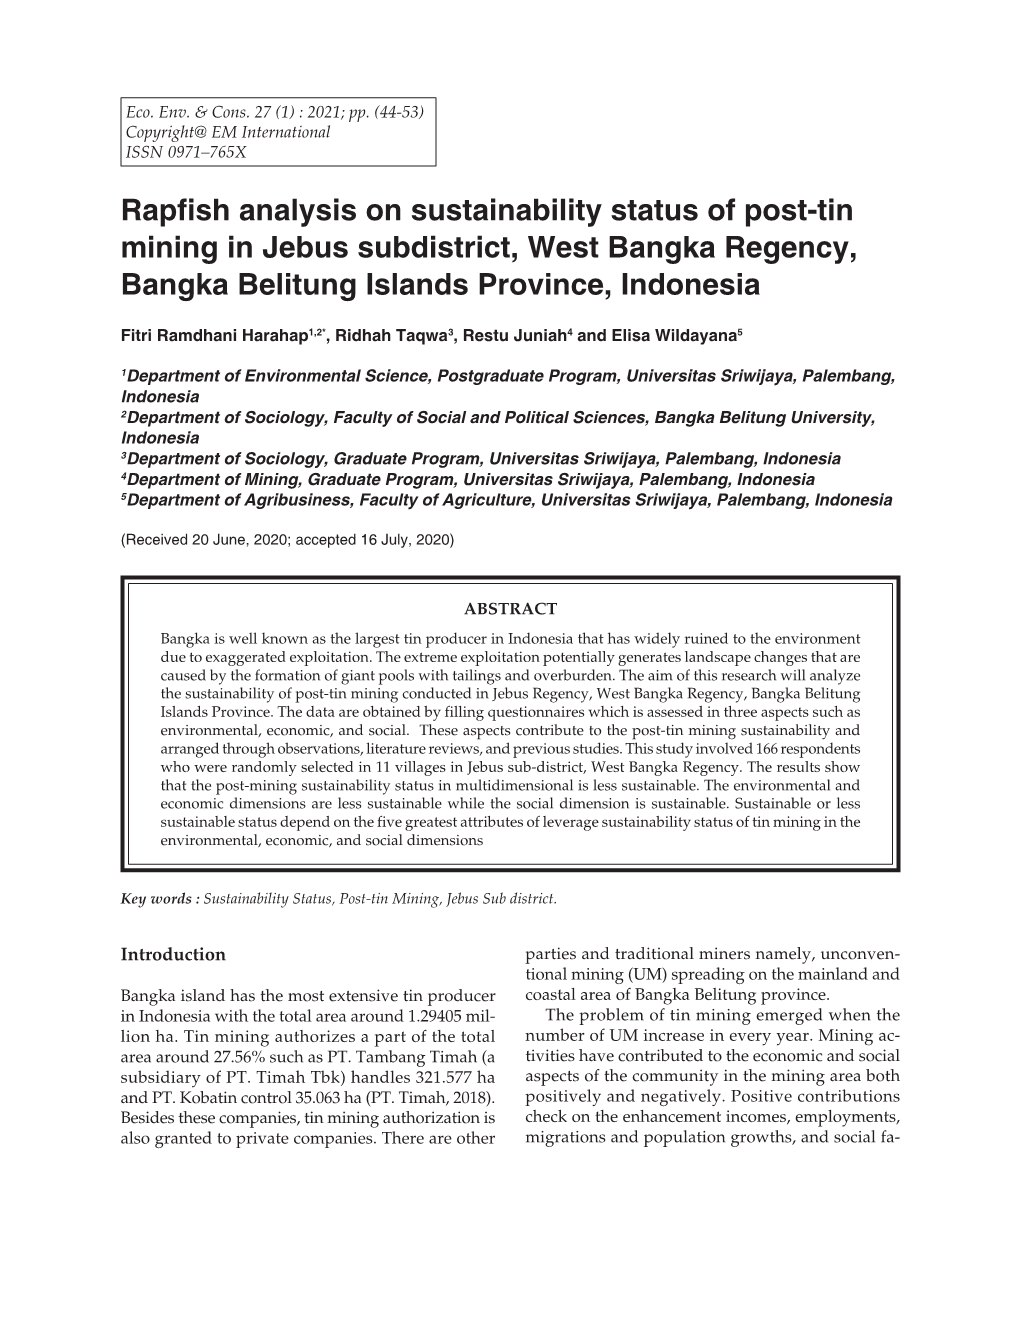 Rapfish Analysis on Sustainability Status of Post-Tin Mining in Jebus Subdistrict, West Bangka Regency, Bangka Belitung Islands Province, Indonesia